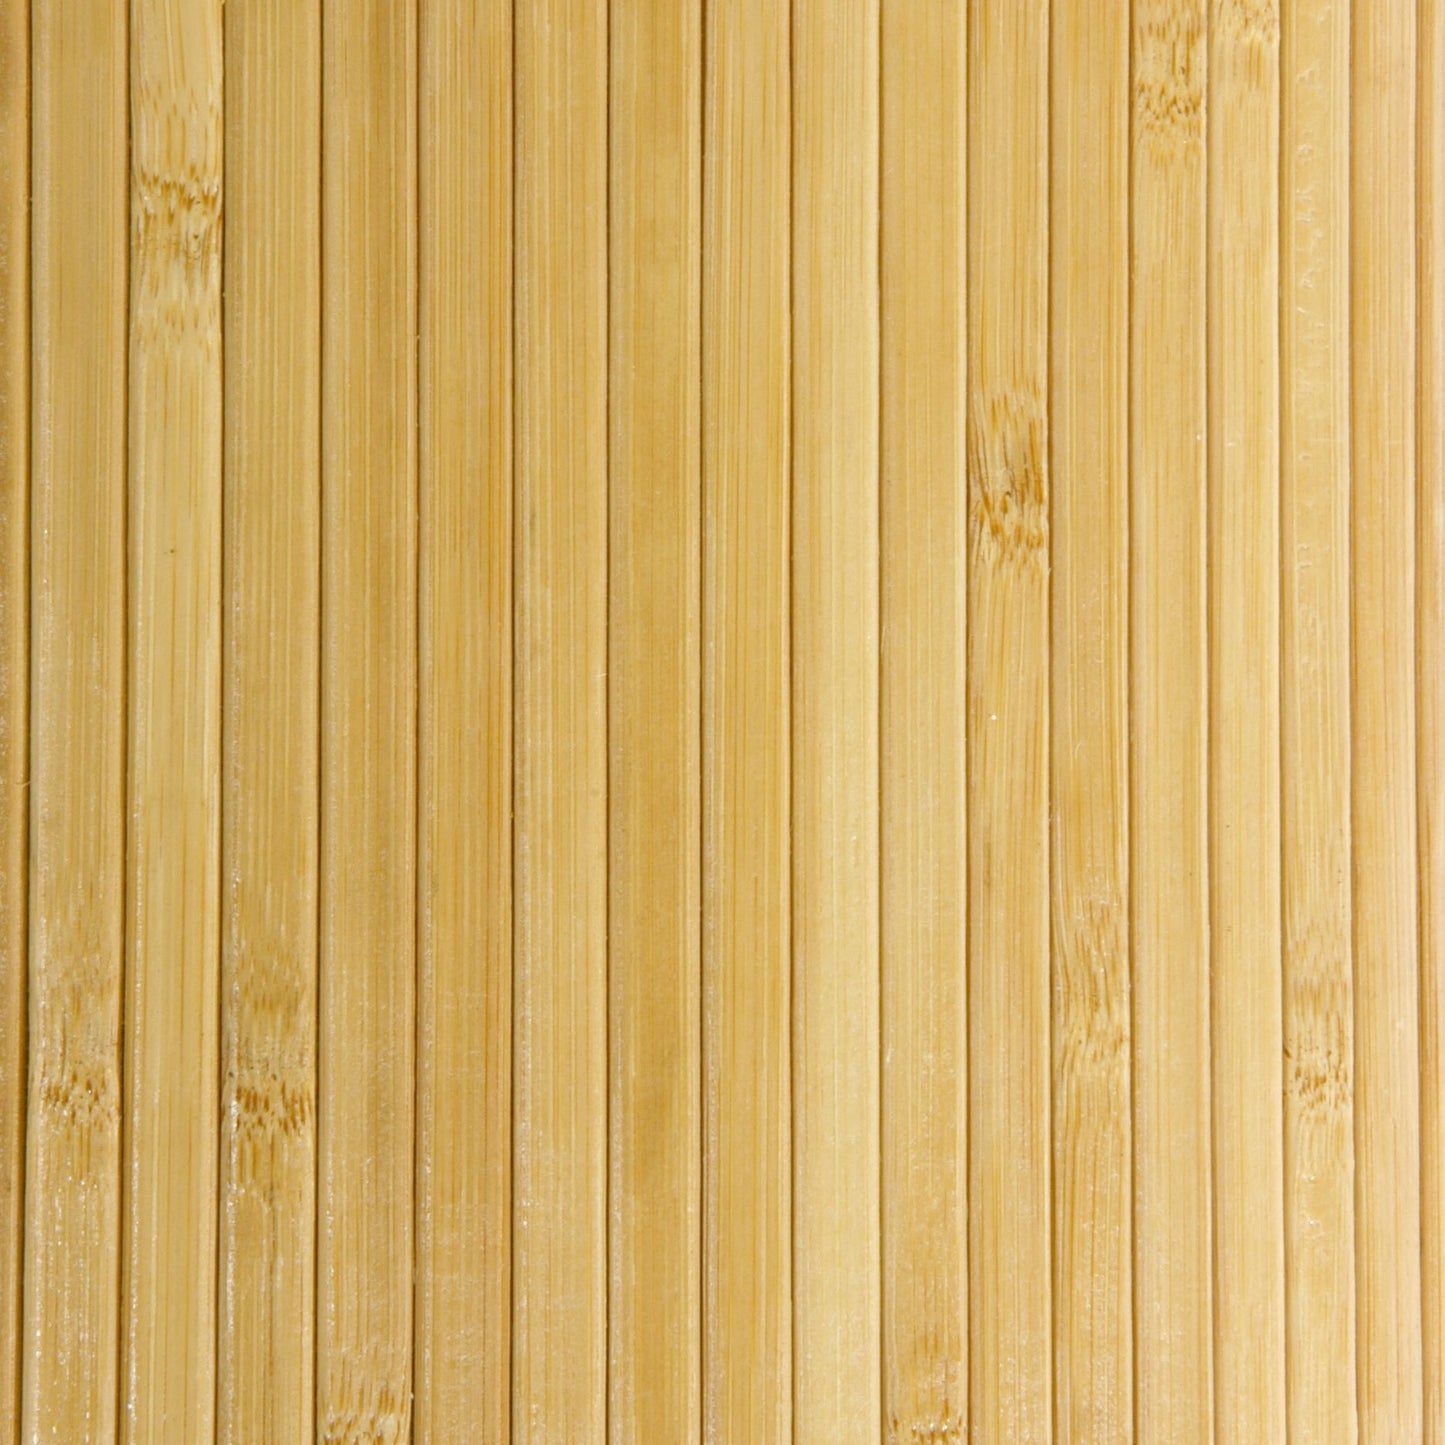 Oriental Furniture 6 ft. Tall Bamboo Wave Screen - Honey